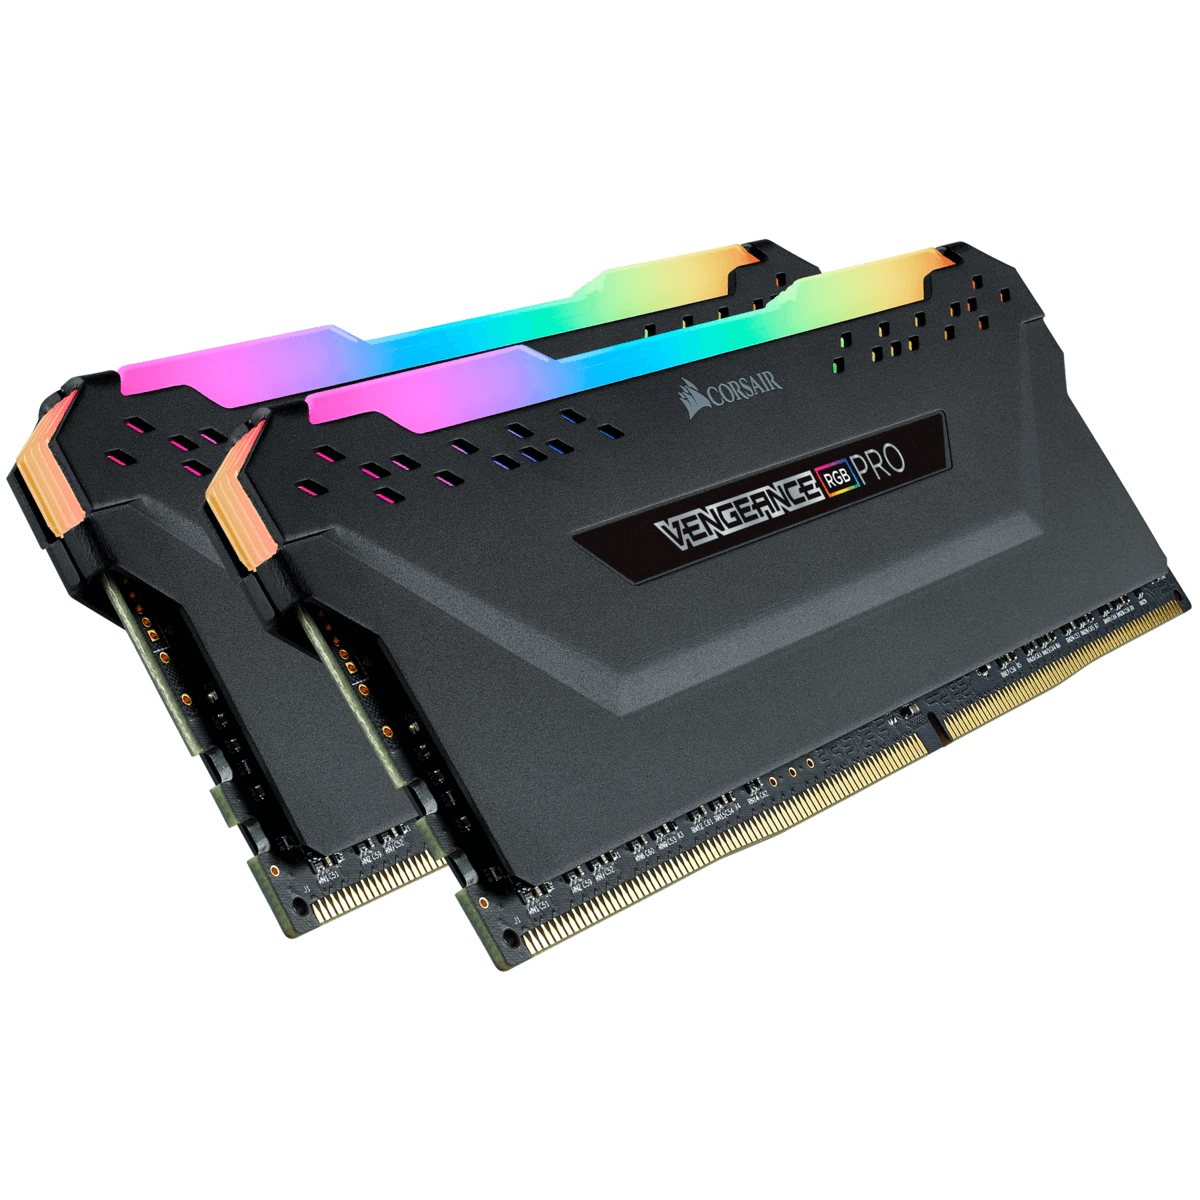 Memória DDR4 Corsair Vengeance RGB Pro, 16GB (2x8GB) 3200MHz, CL14, Black, CMW16GX4M2C3200C14